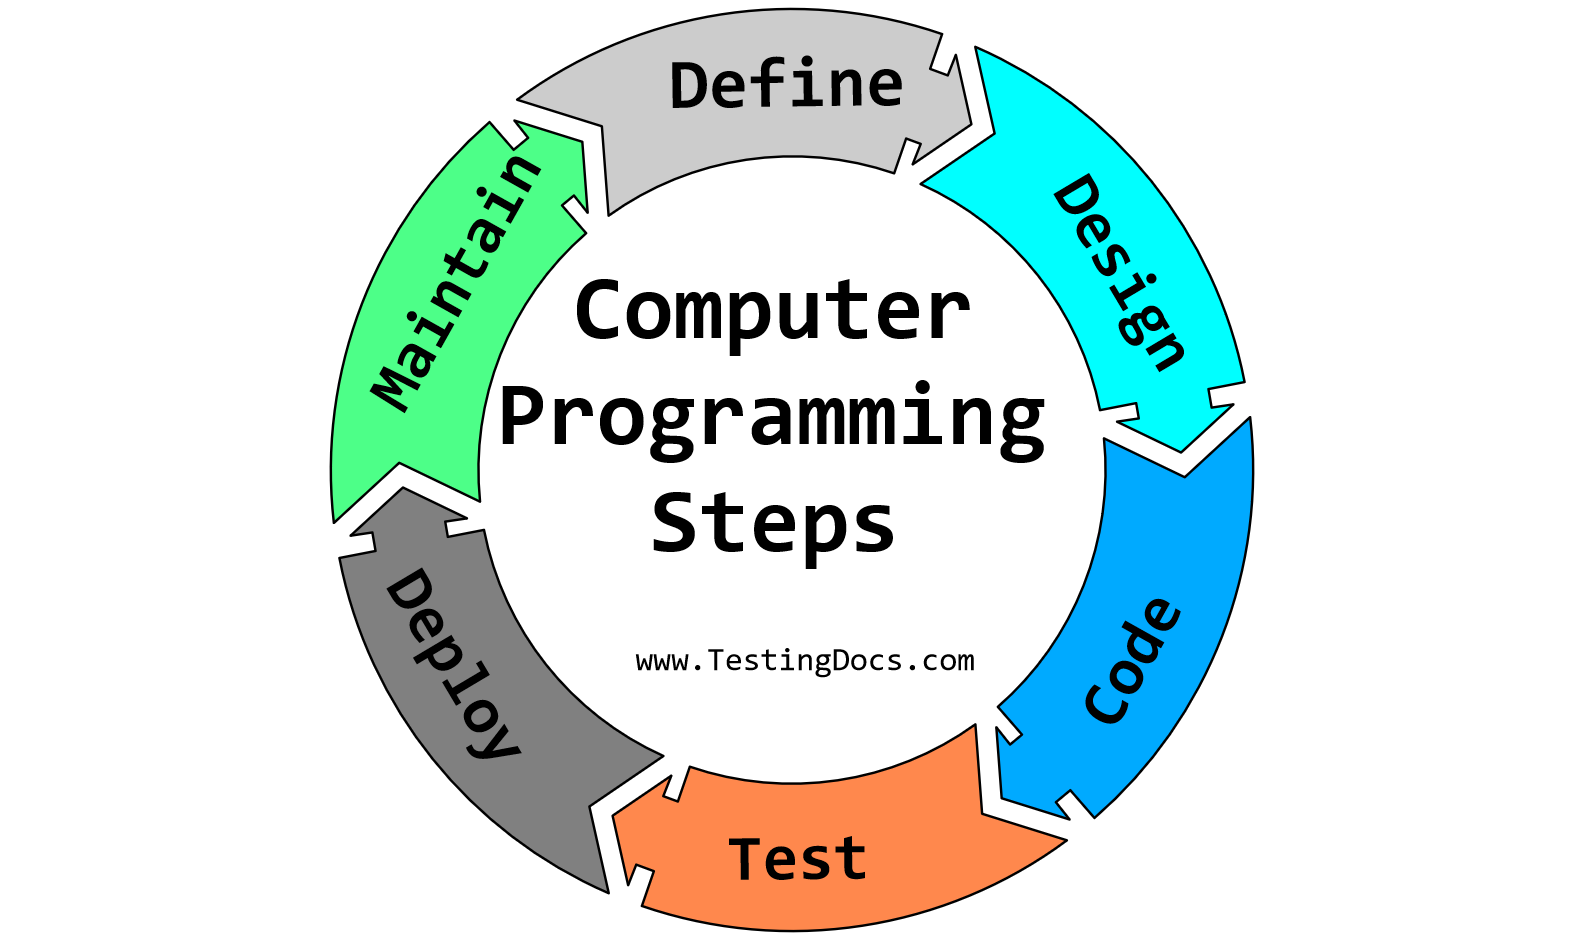 Computer Programming Steps